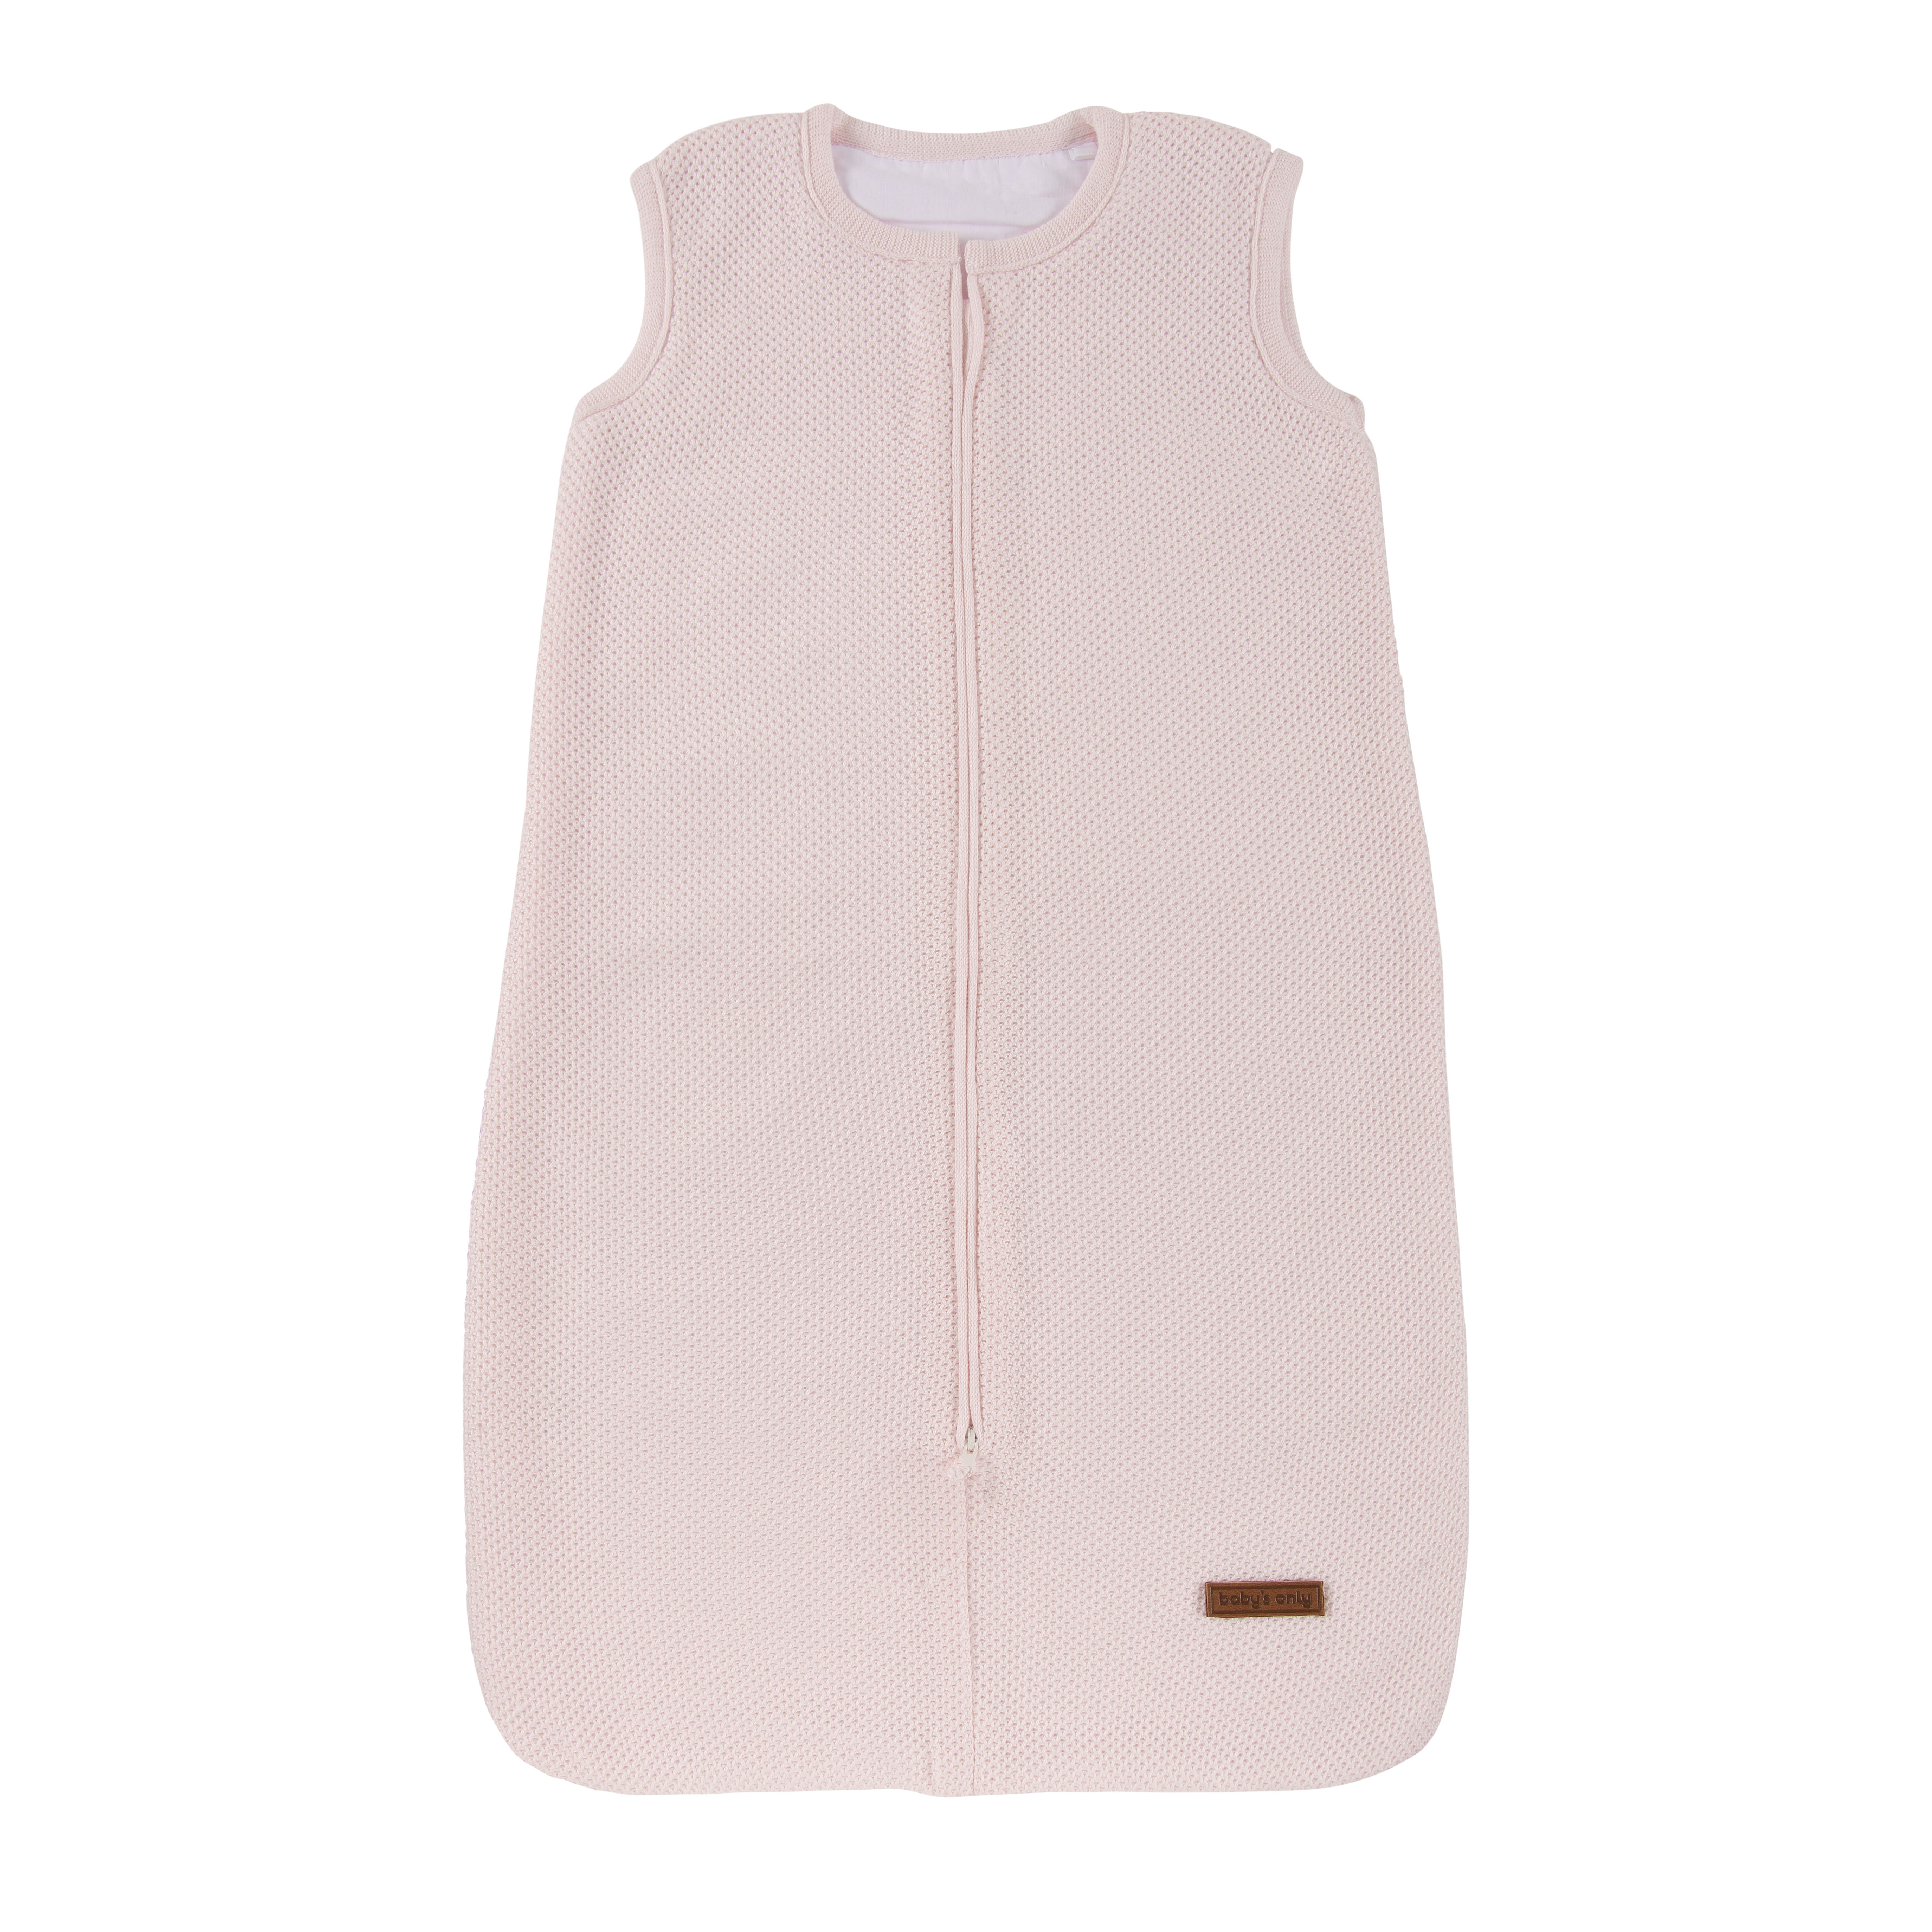 Sleeping bag Classic pink - 70 cm